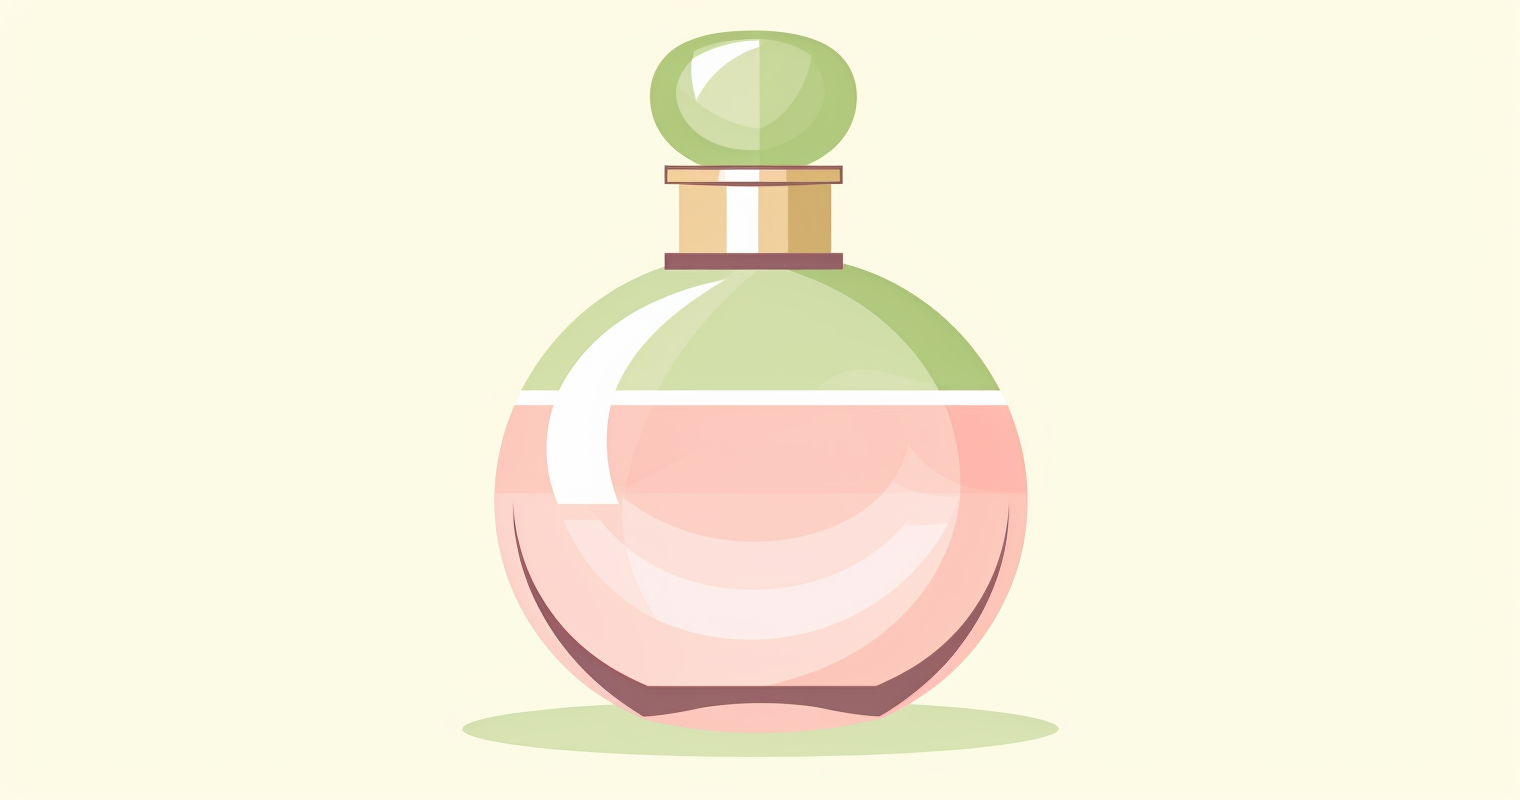 A perfume bottle.